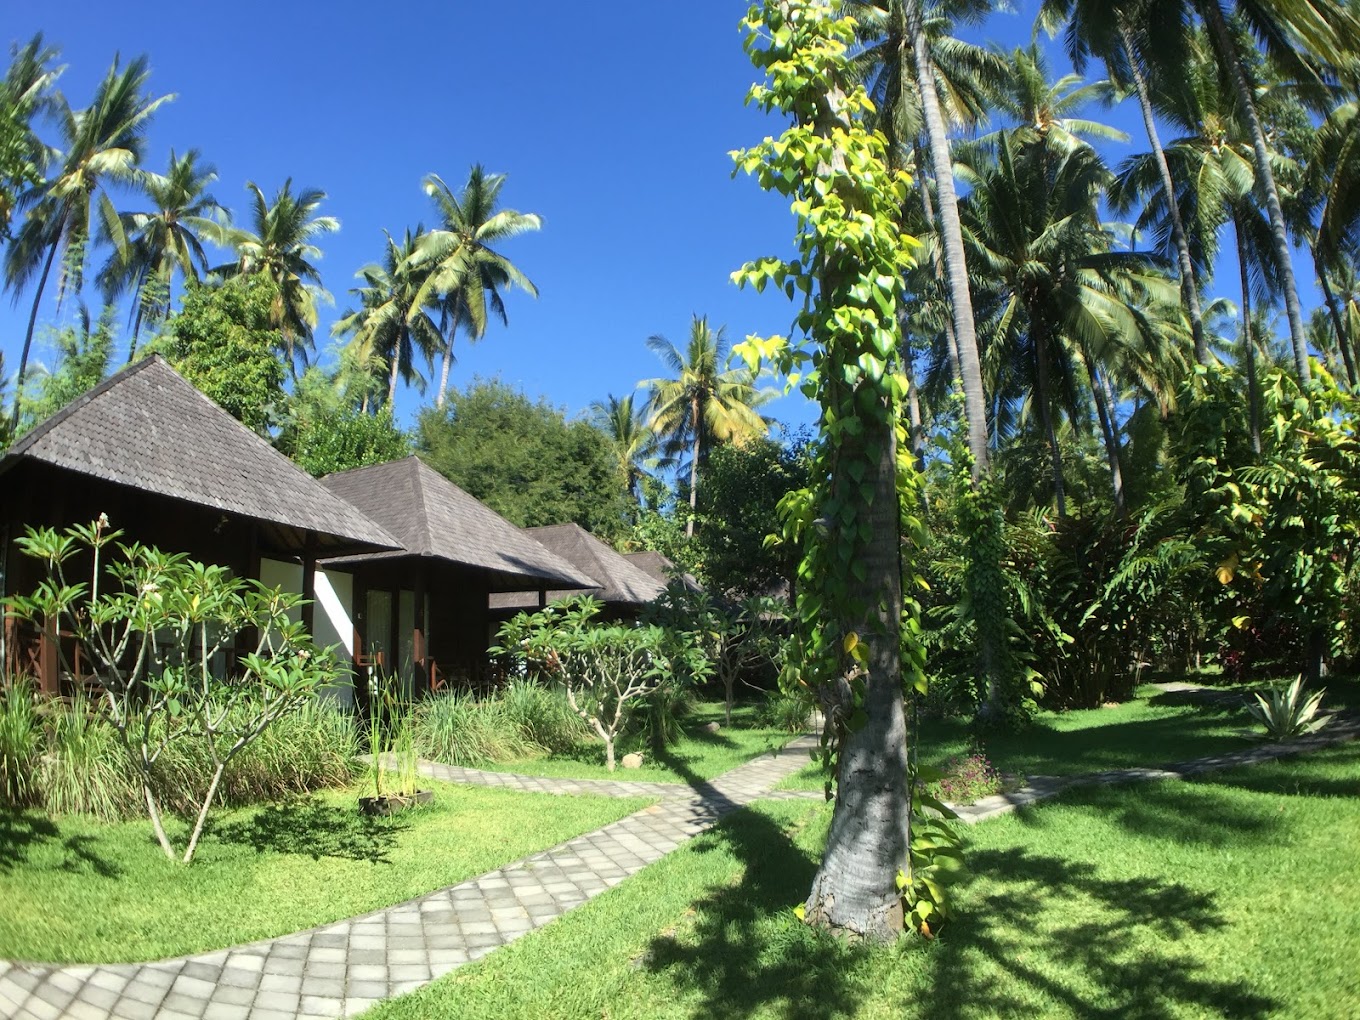 Bali Au Natural Beach Resort